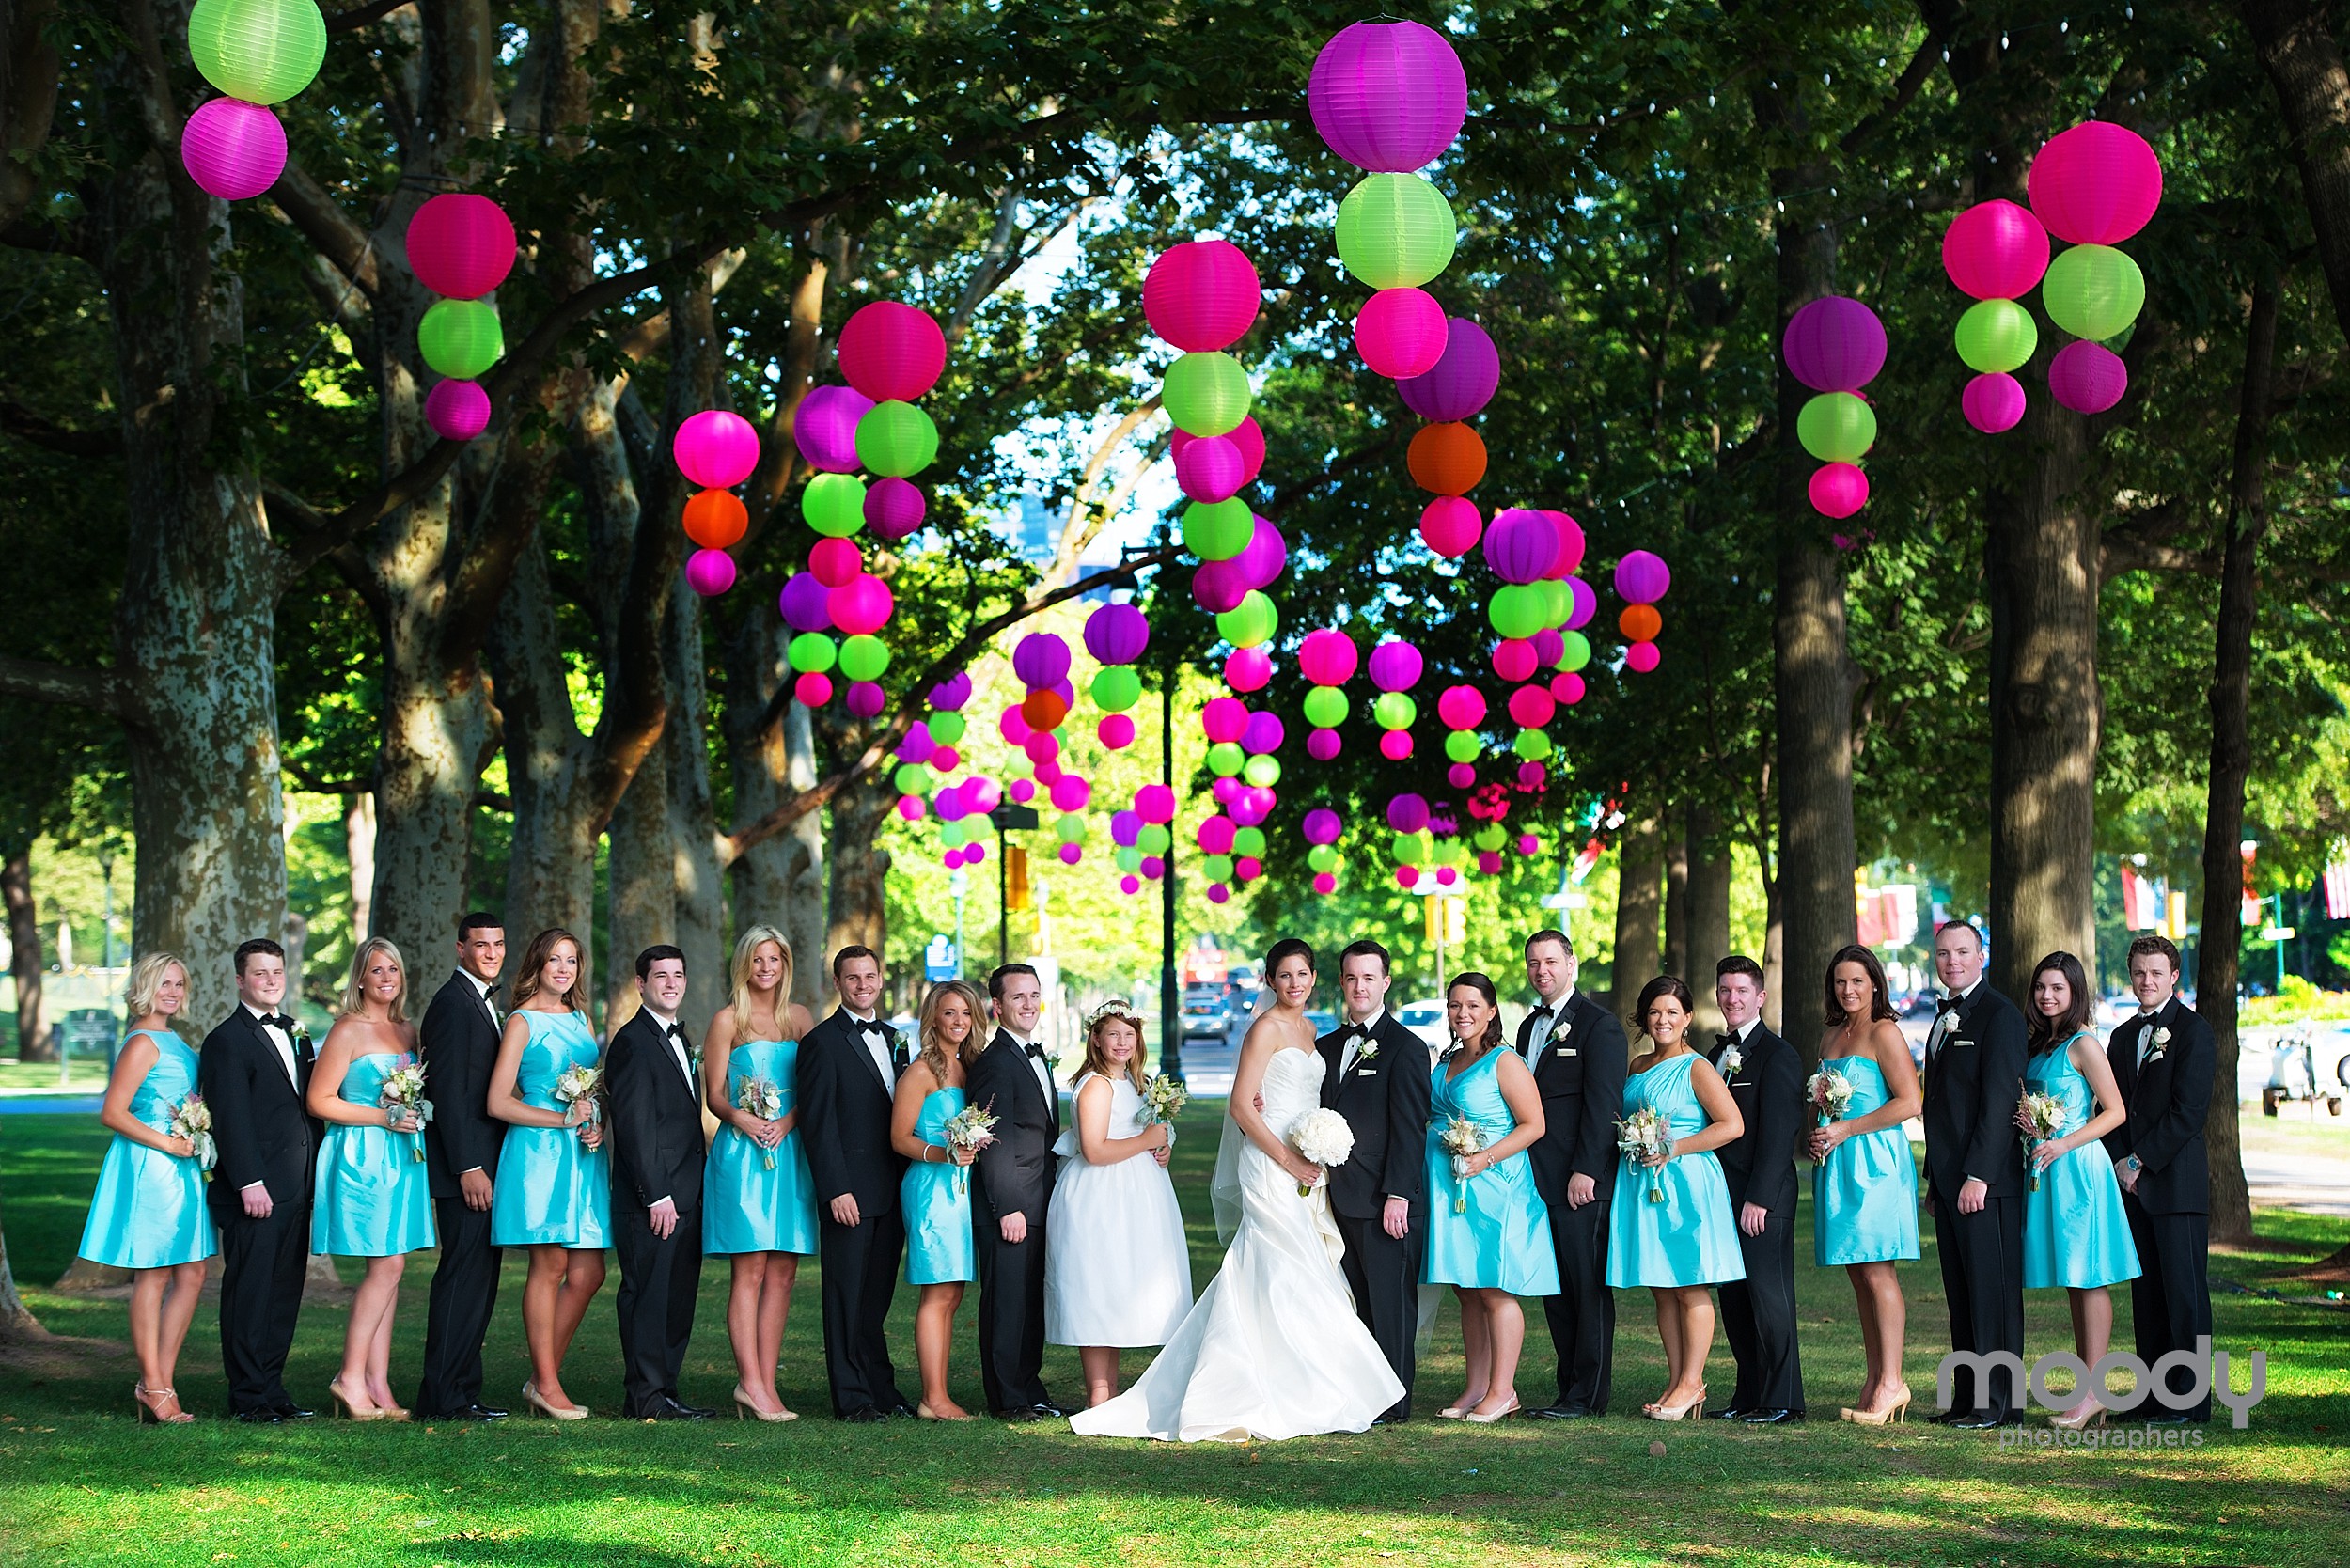 Wedding Photographers Limerick, PA | Moody Photographers